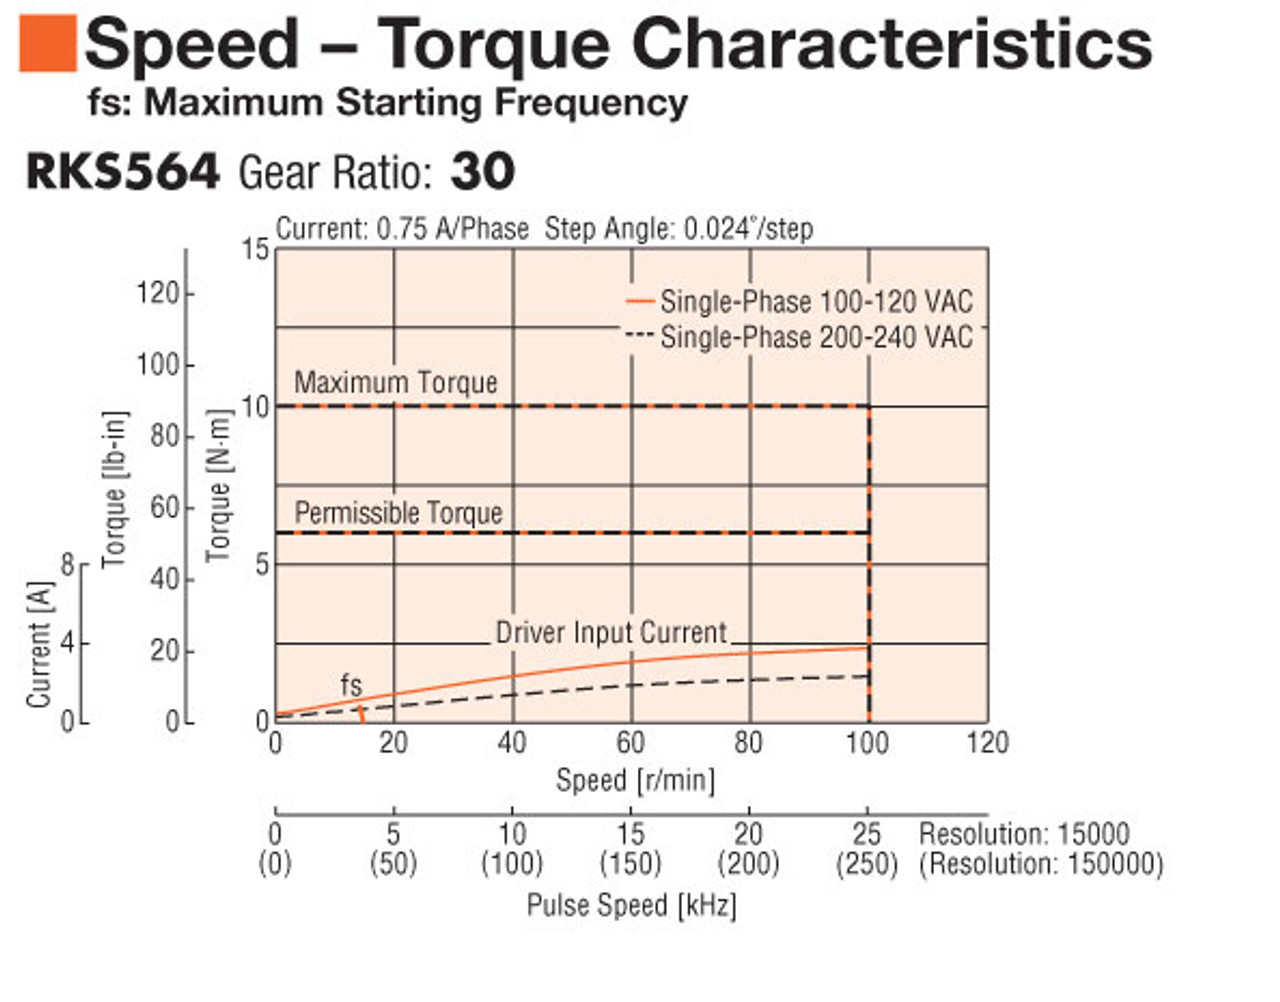 PKE564MC-TS30 - Speed-Torque